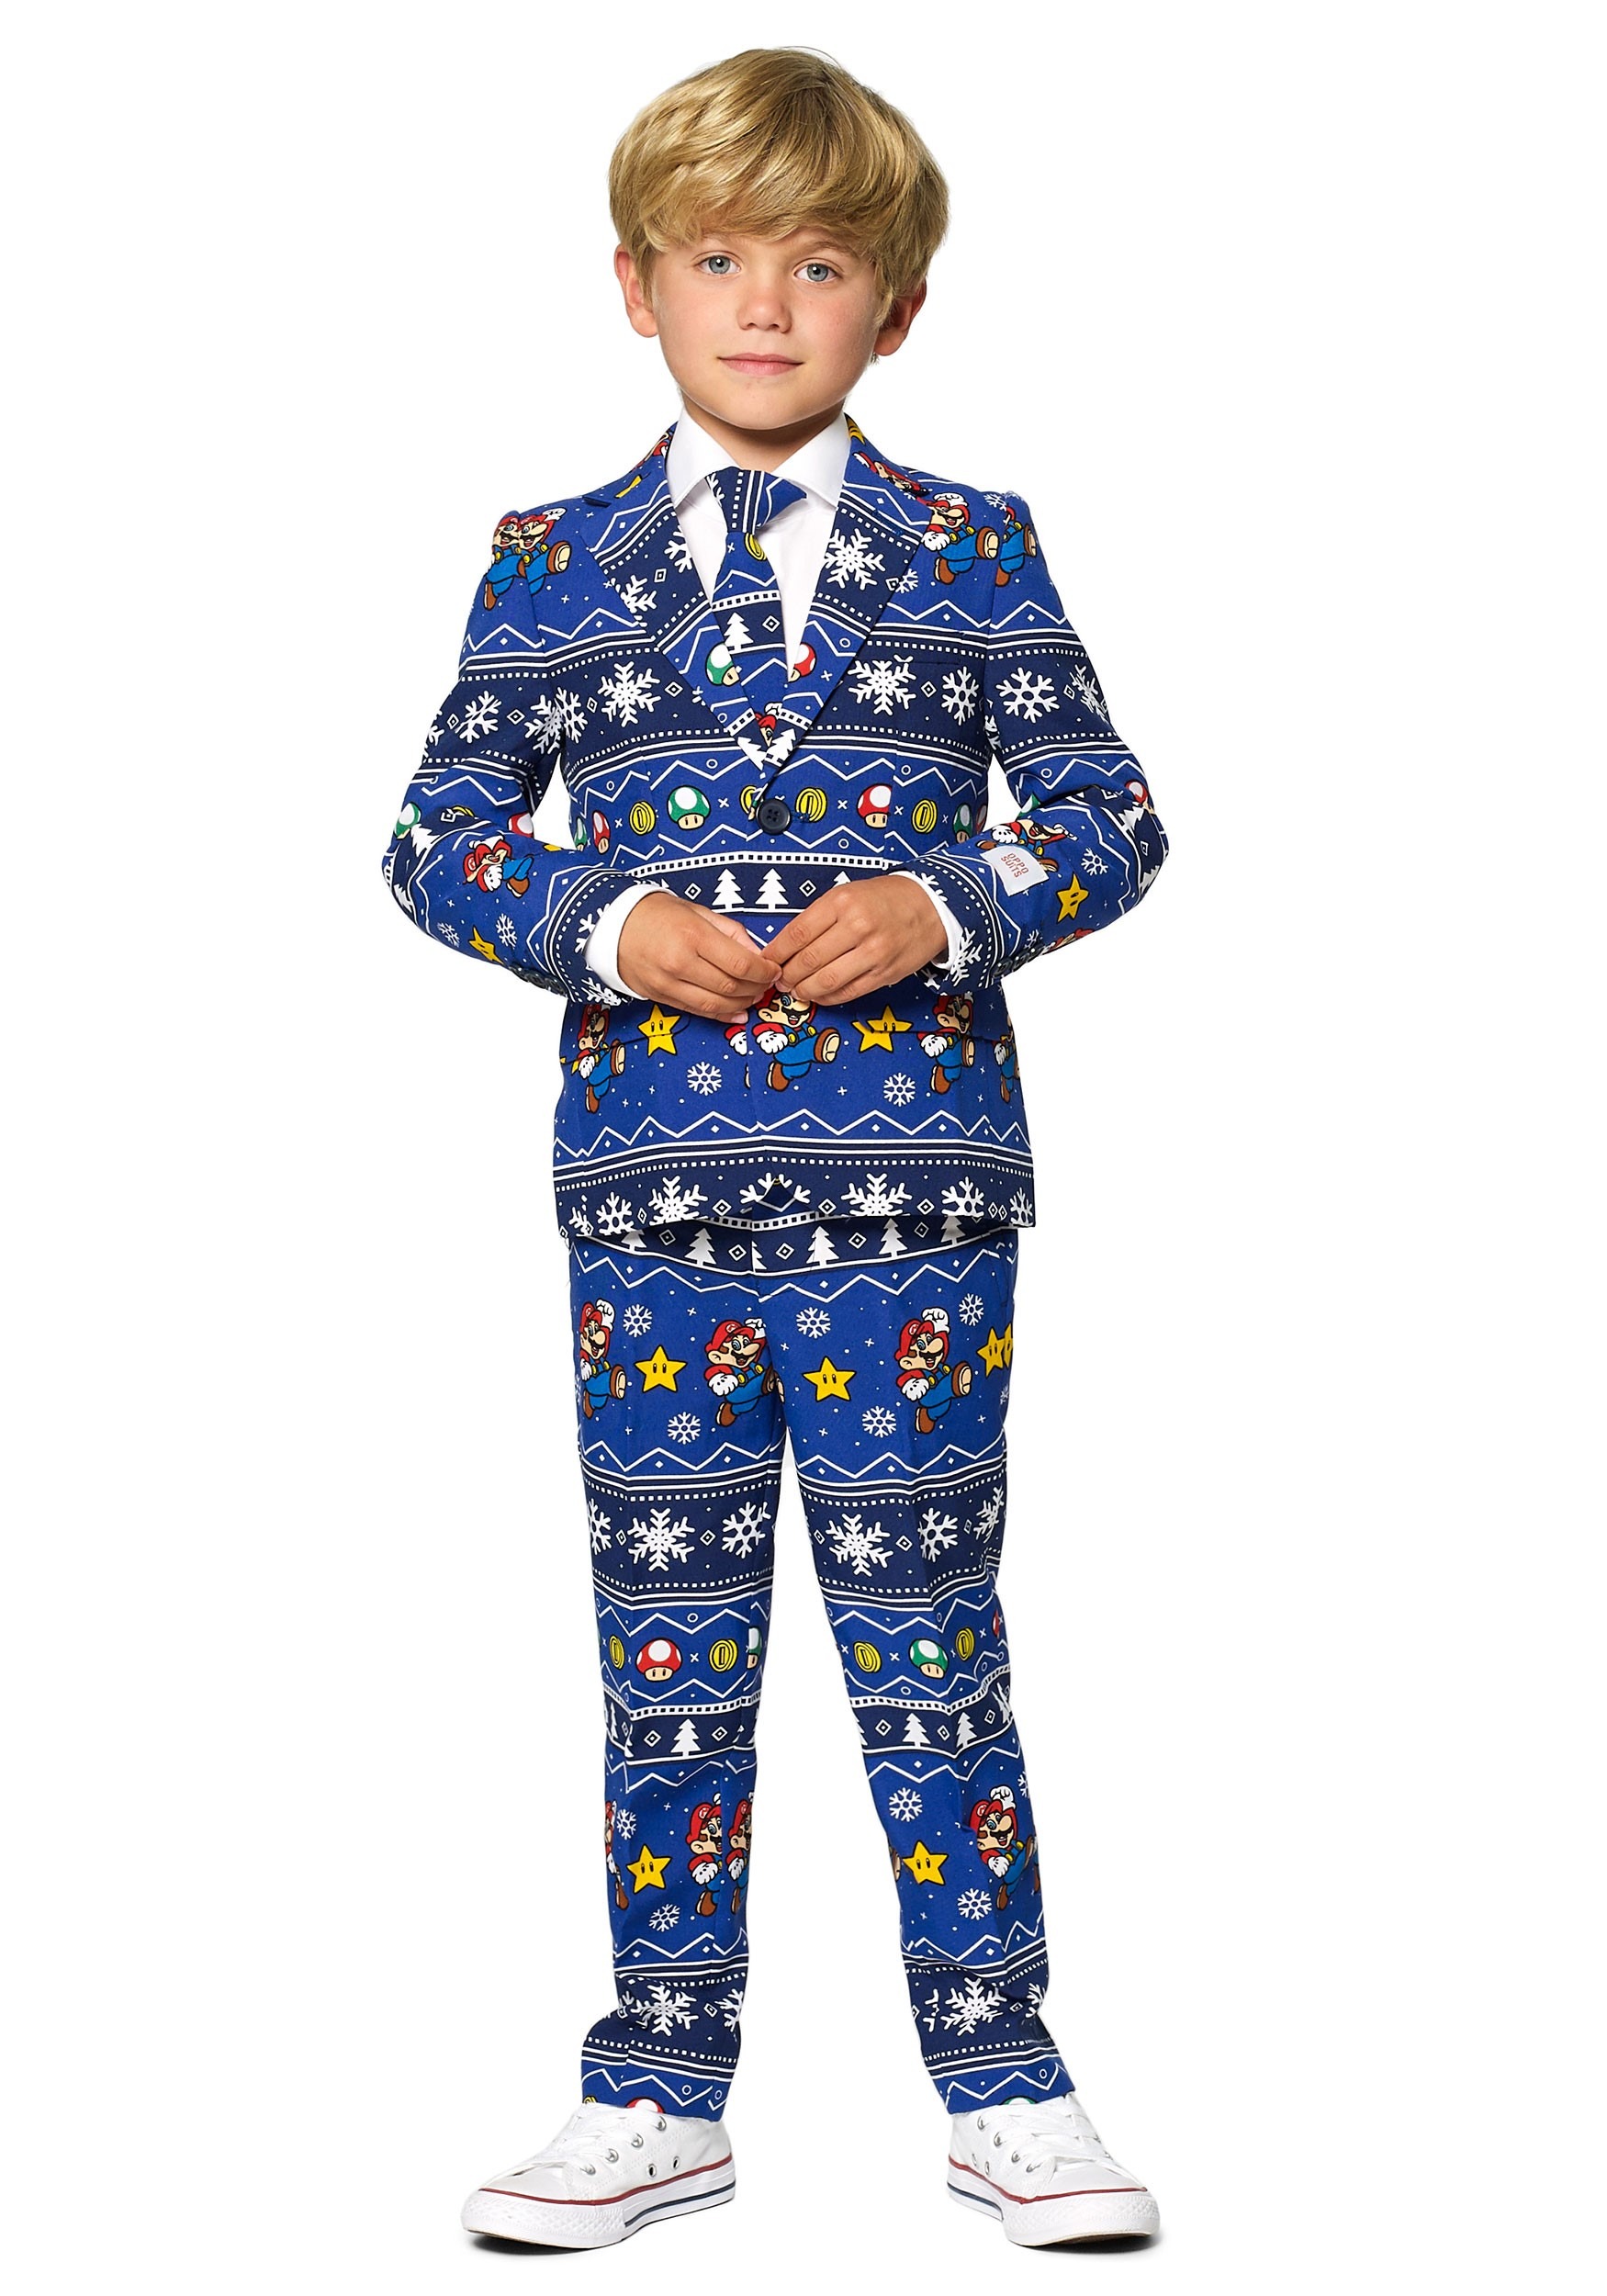 Opposuit: Merry Mario Boy’s Suit